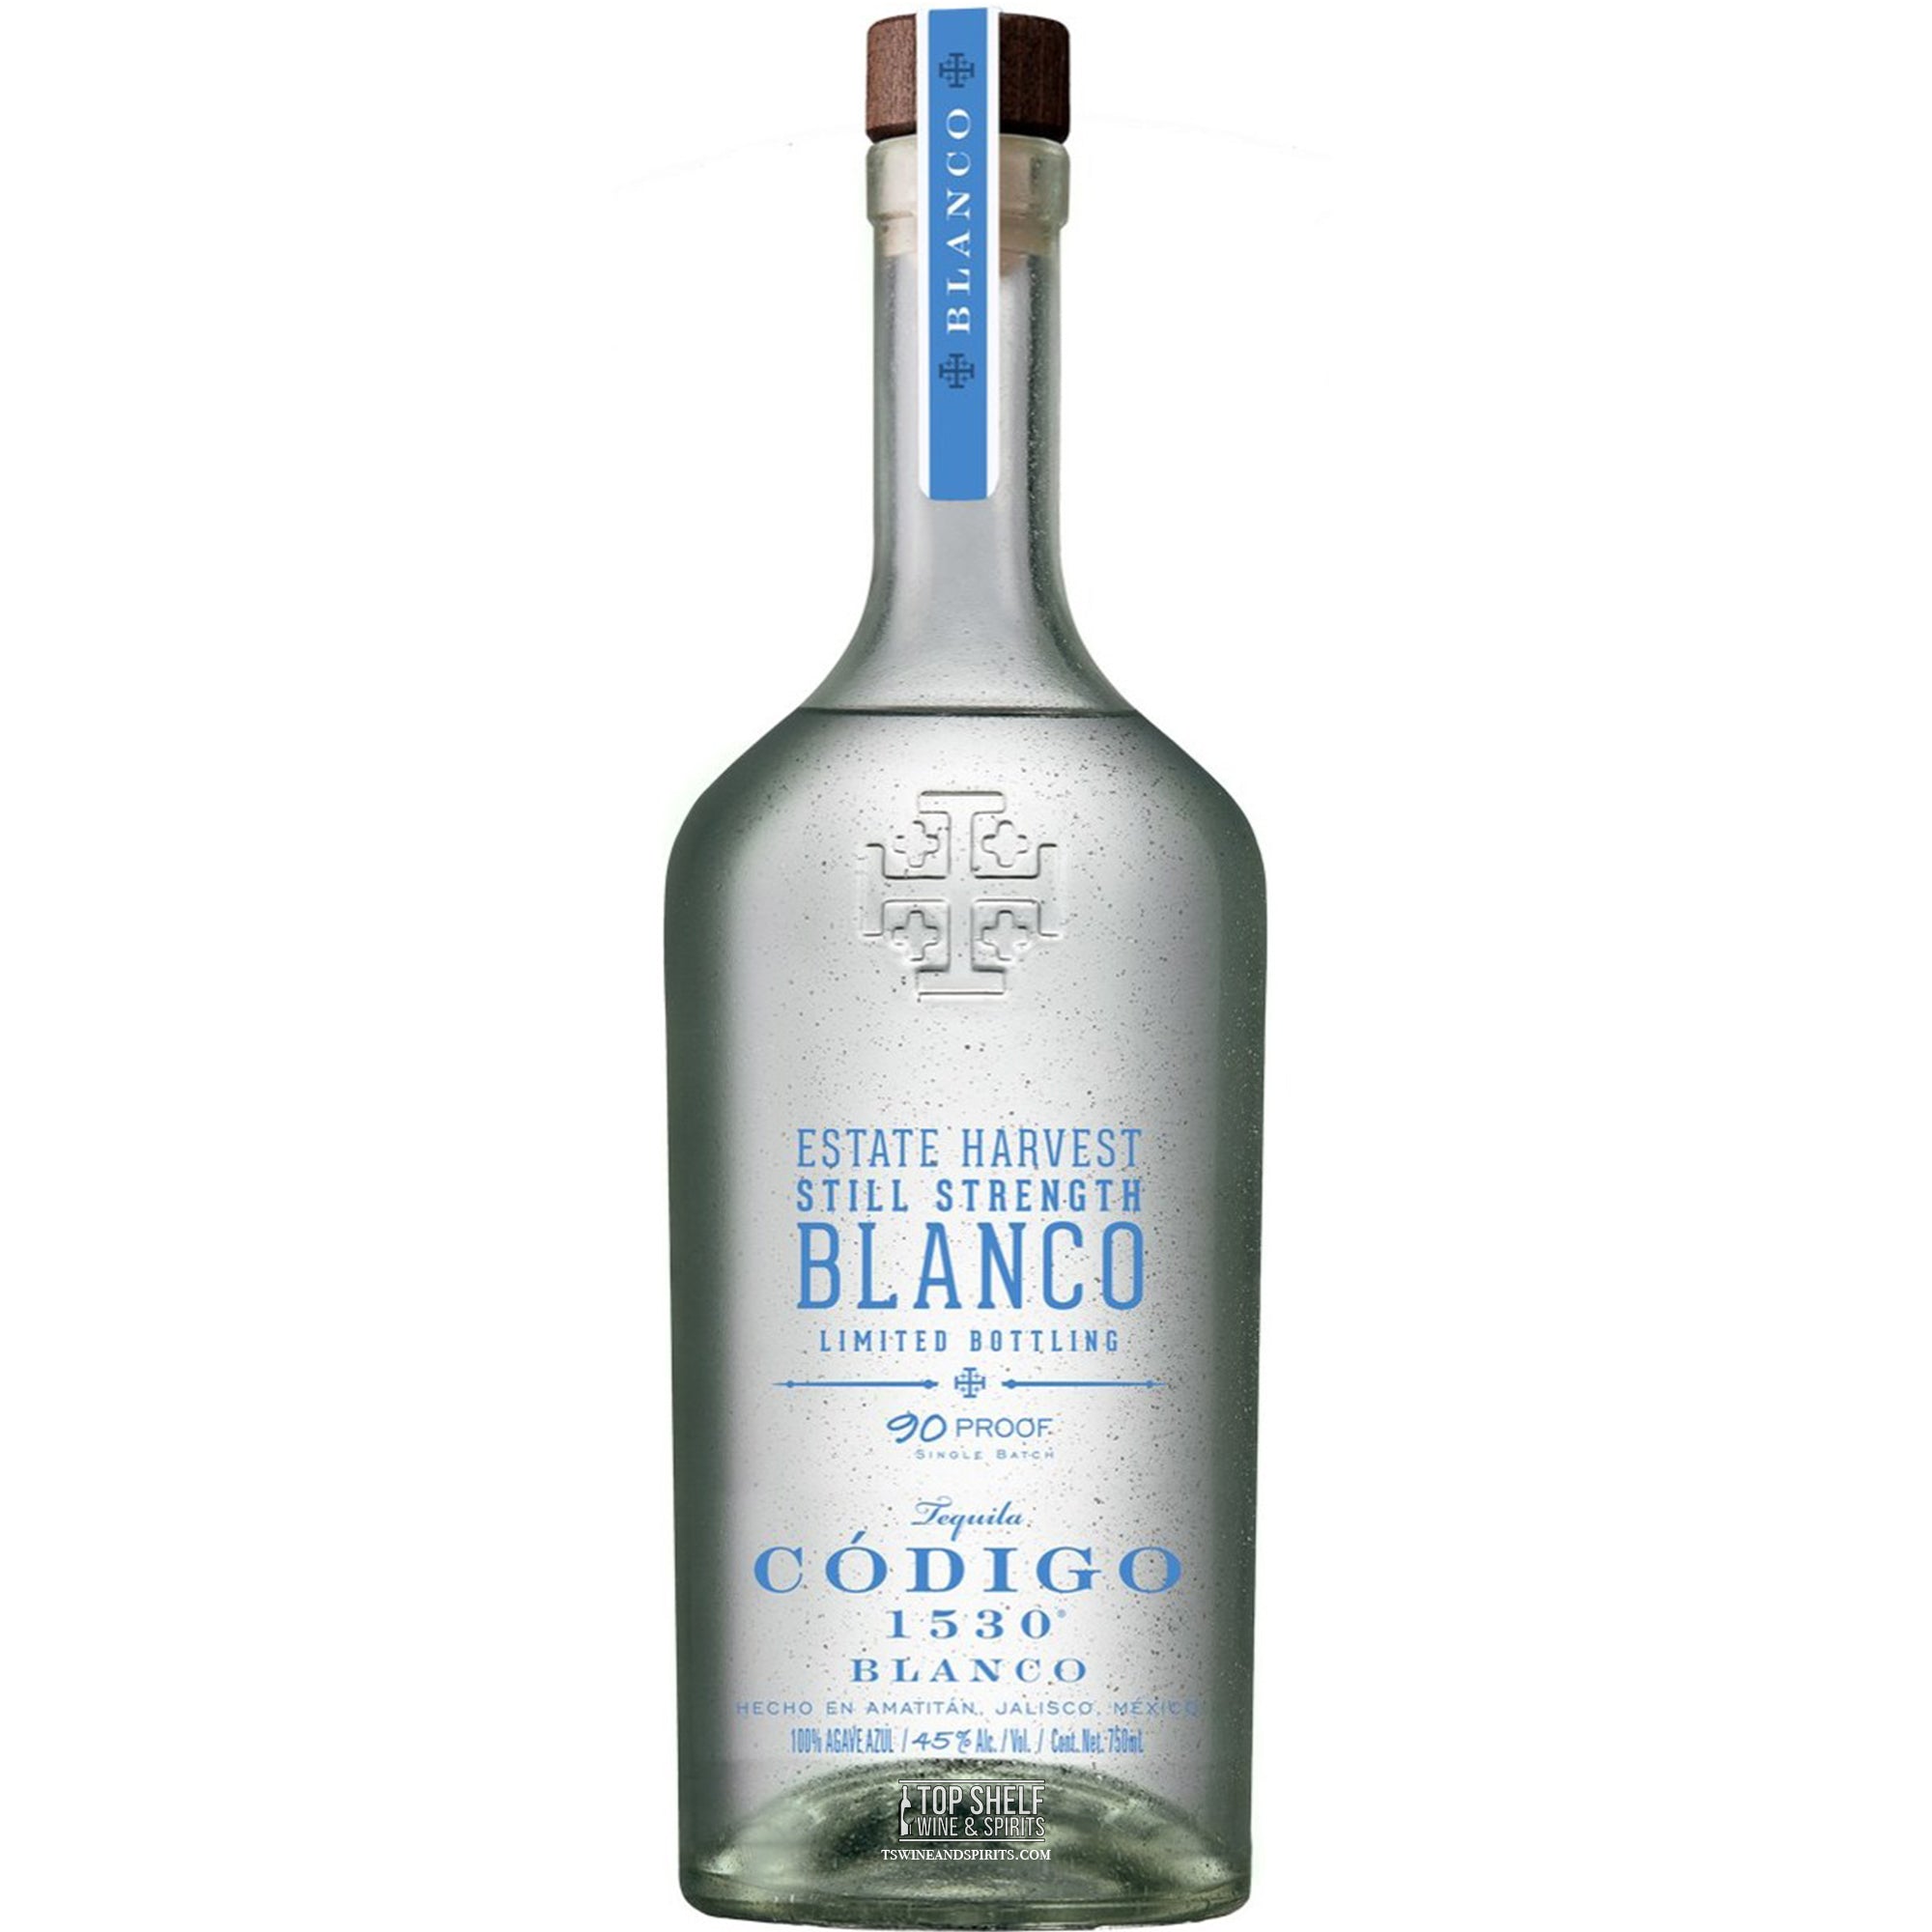 Código 1530 Still Strength Blanco Tequila (Limited Edition)